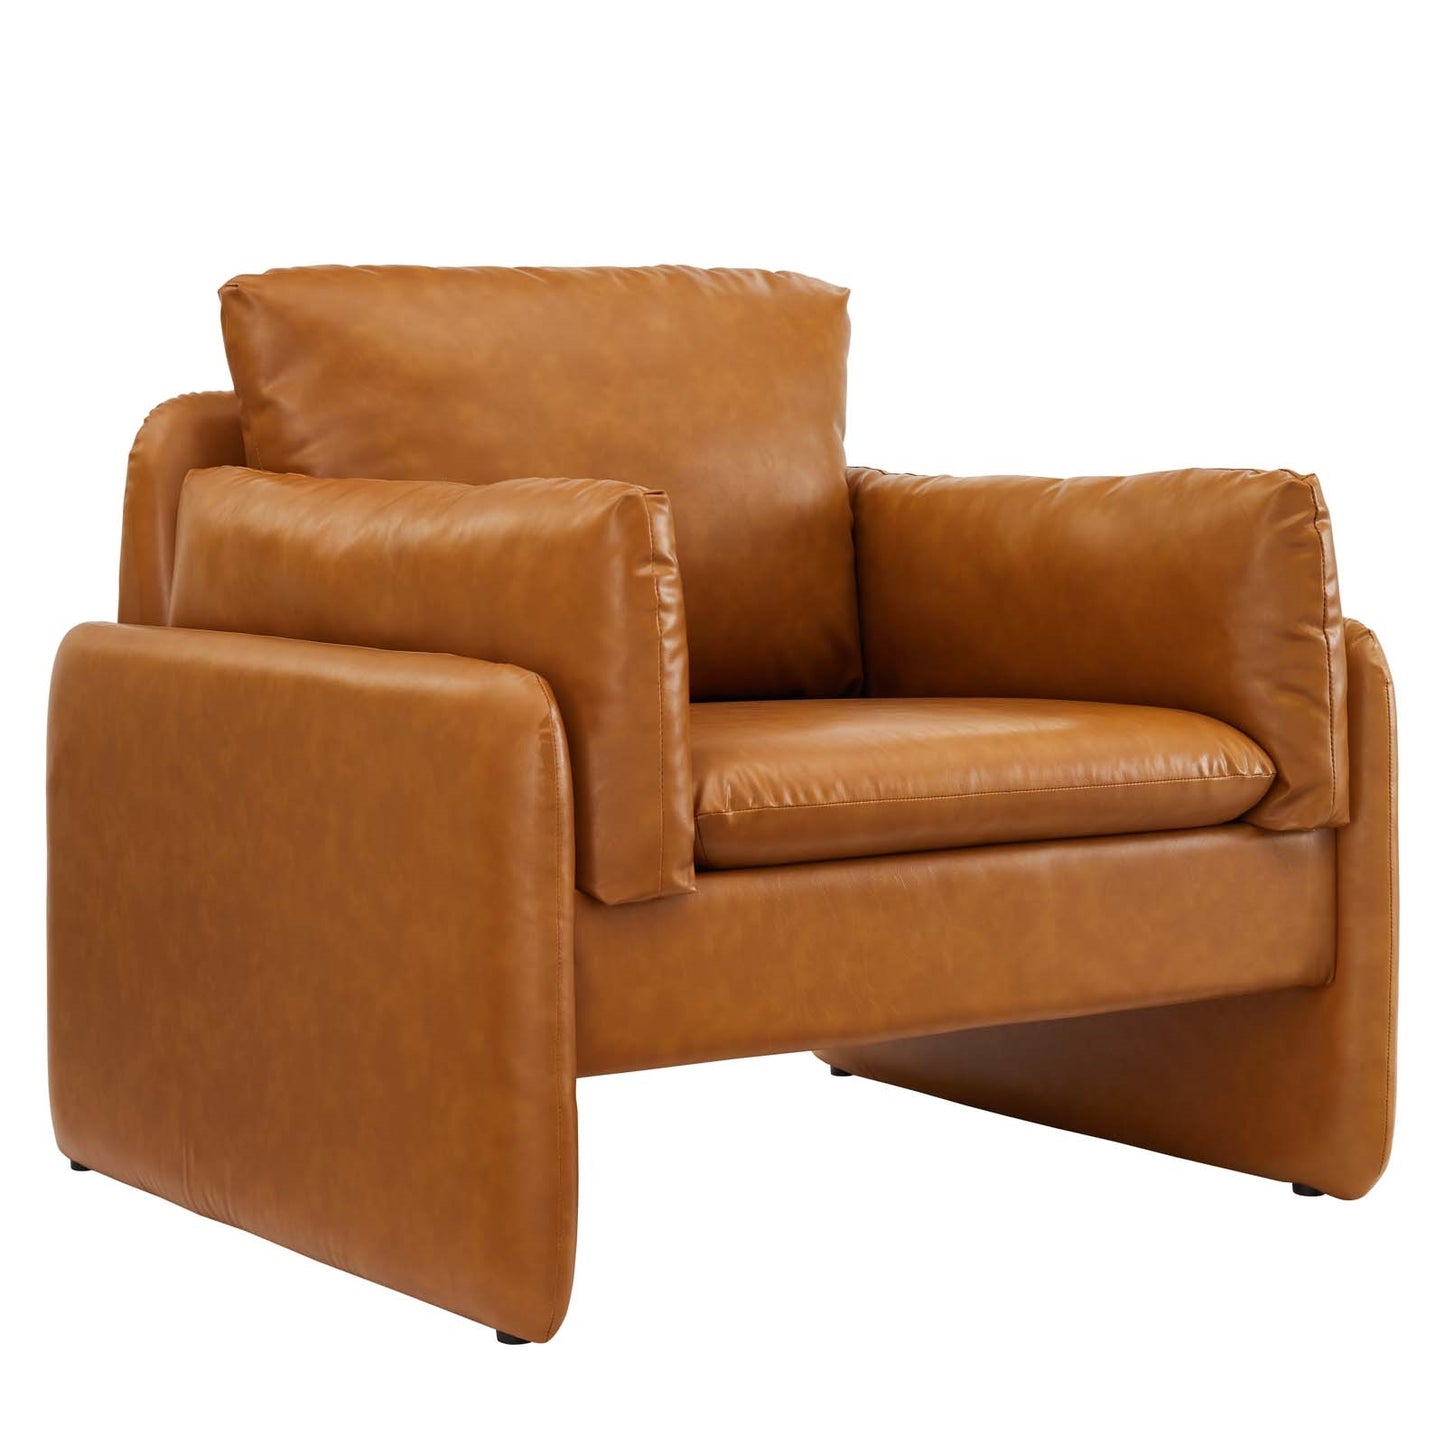 Louise Vegan Leather Armchair